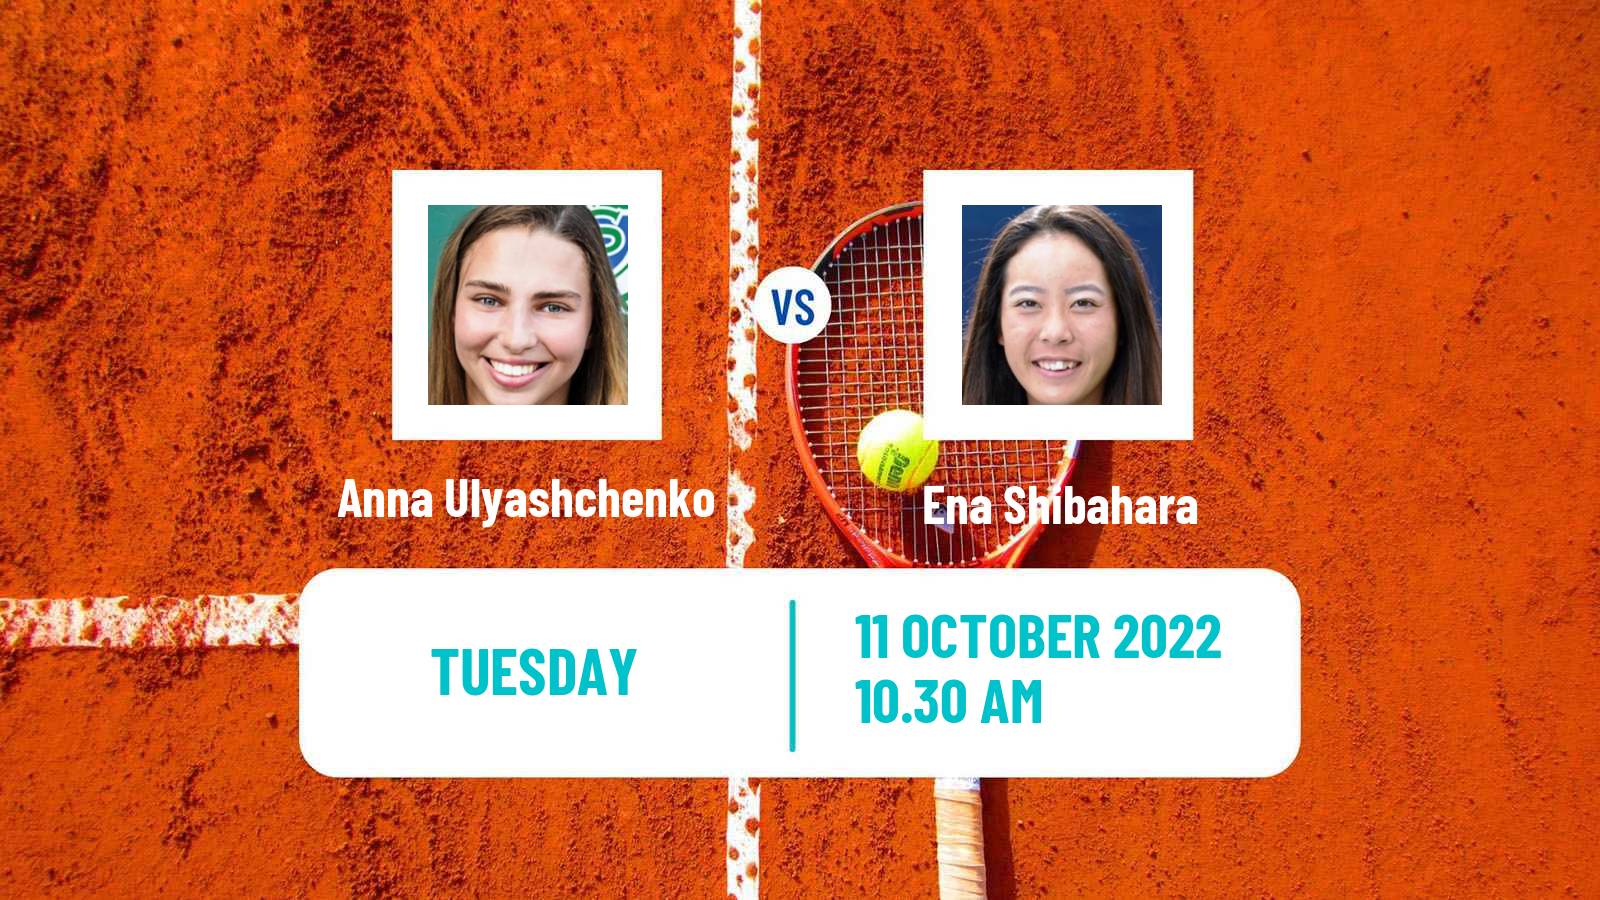 Tennis ITF Tournaments Anna Ulyashchenko - Ena Shibahara